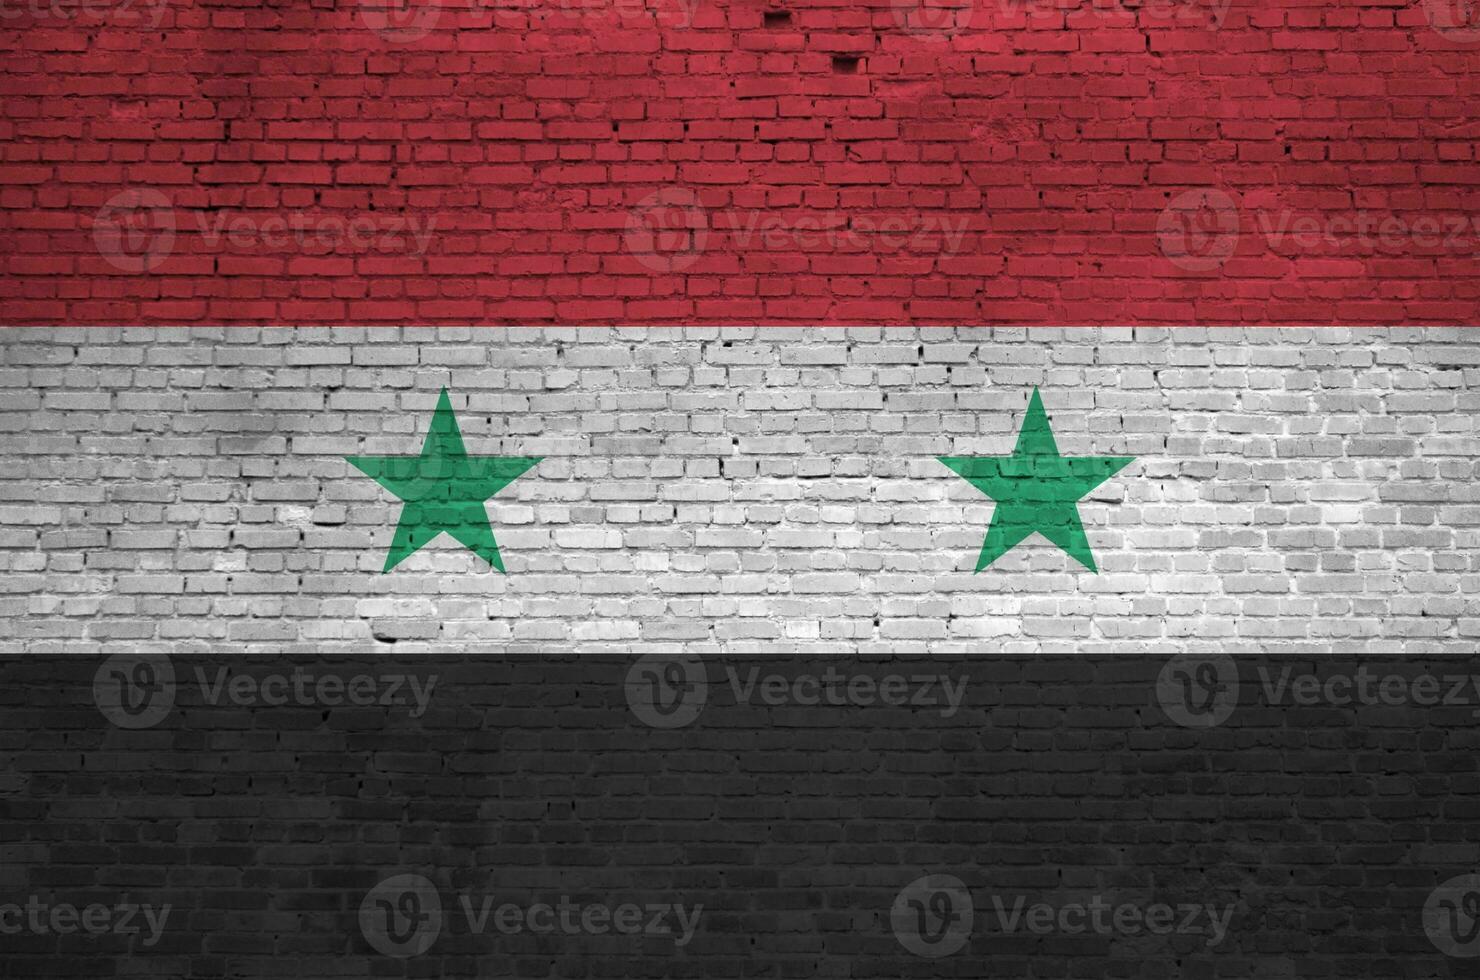 Syrië vlag afgebeeld in verf kleuren Aan oud steen muur. getextureerde banier Aan groot steen muur metselwerk achtergrond foto